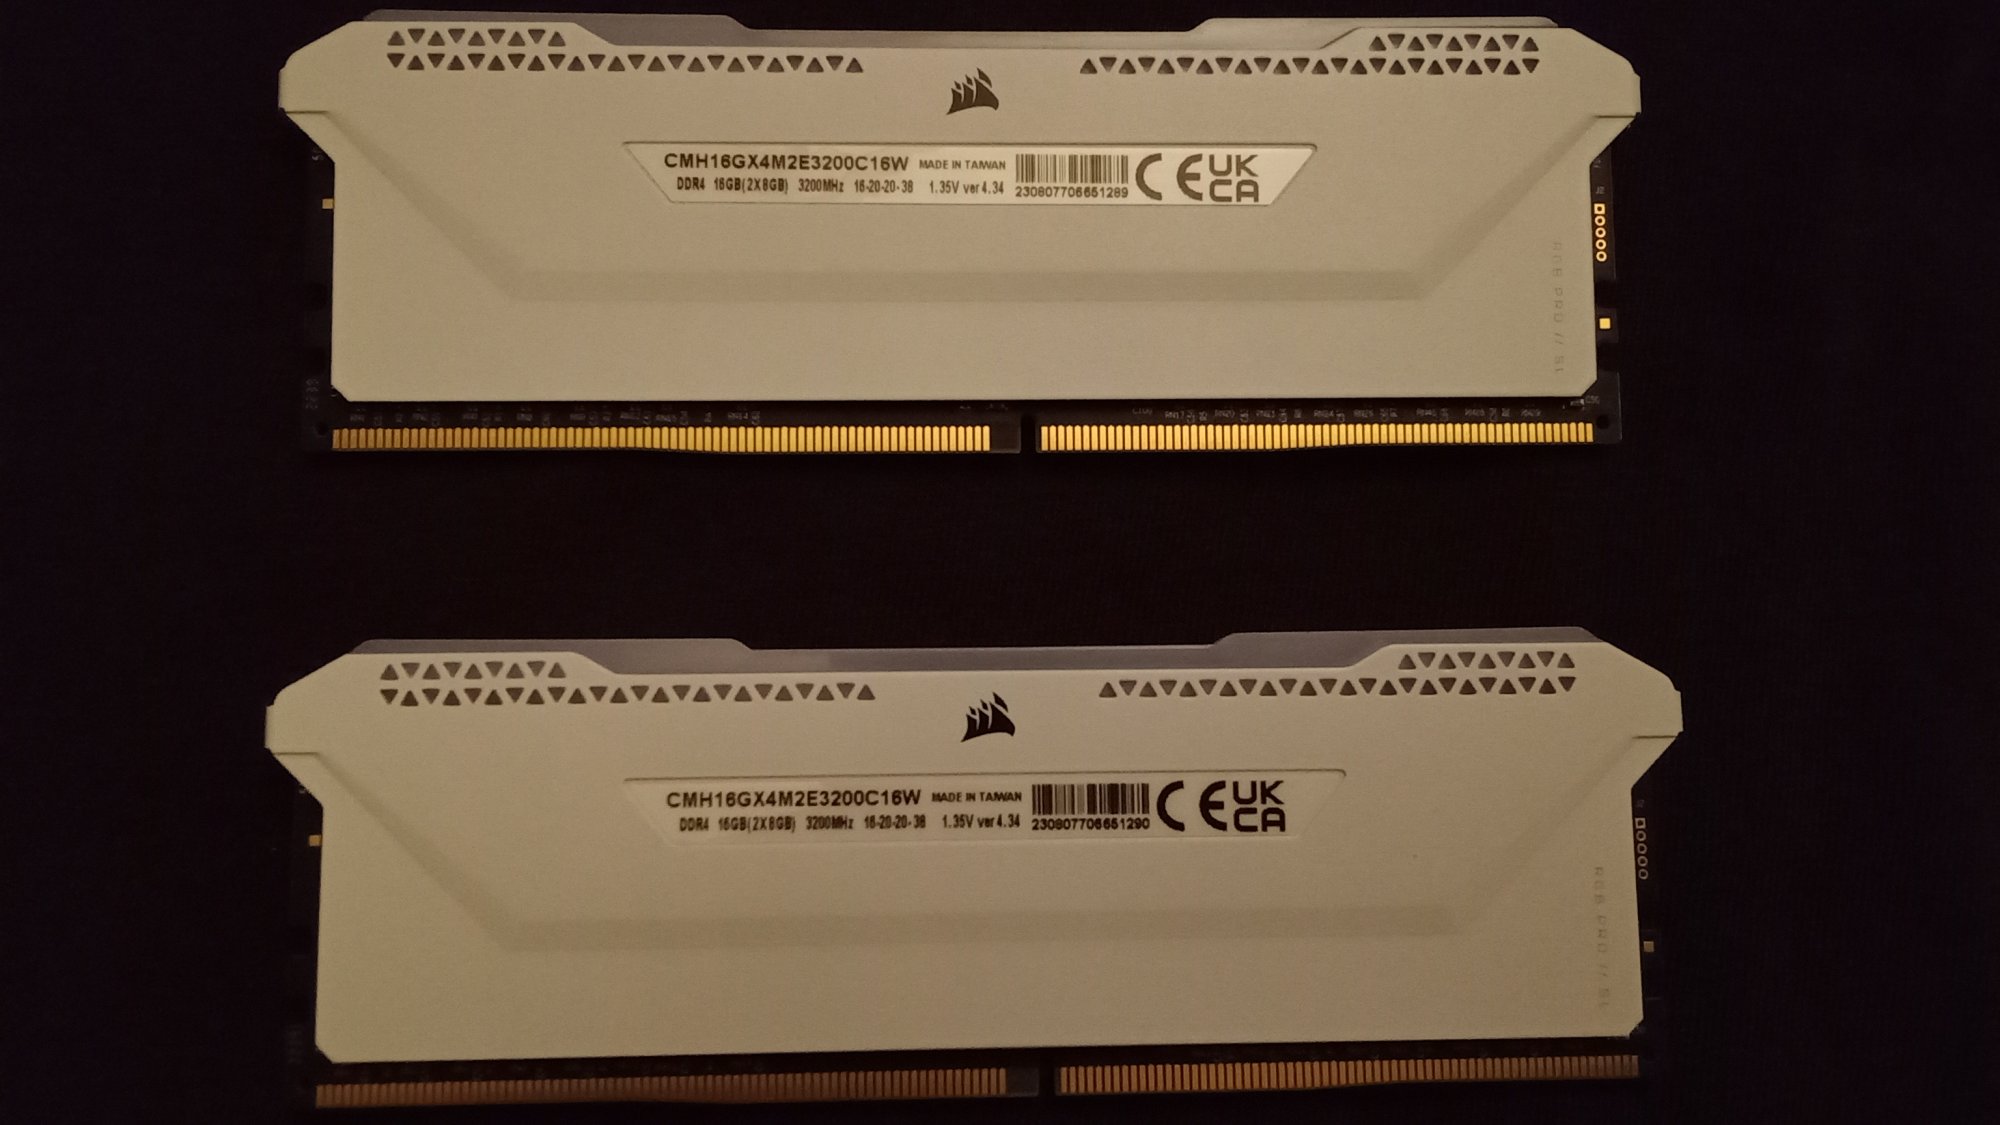 FS: Corsair Vengeance RGB 16GB DDR4 3200mhz (2x8GB) [SOLD], [H]ard